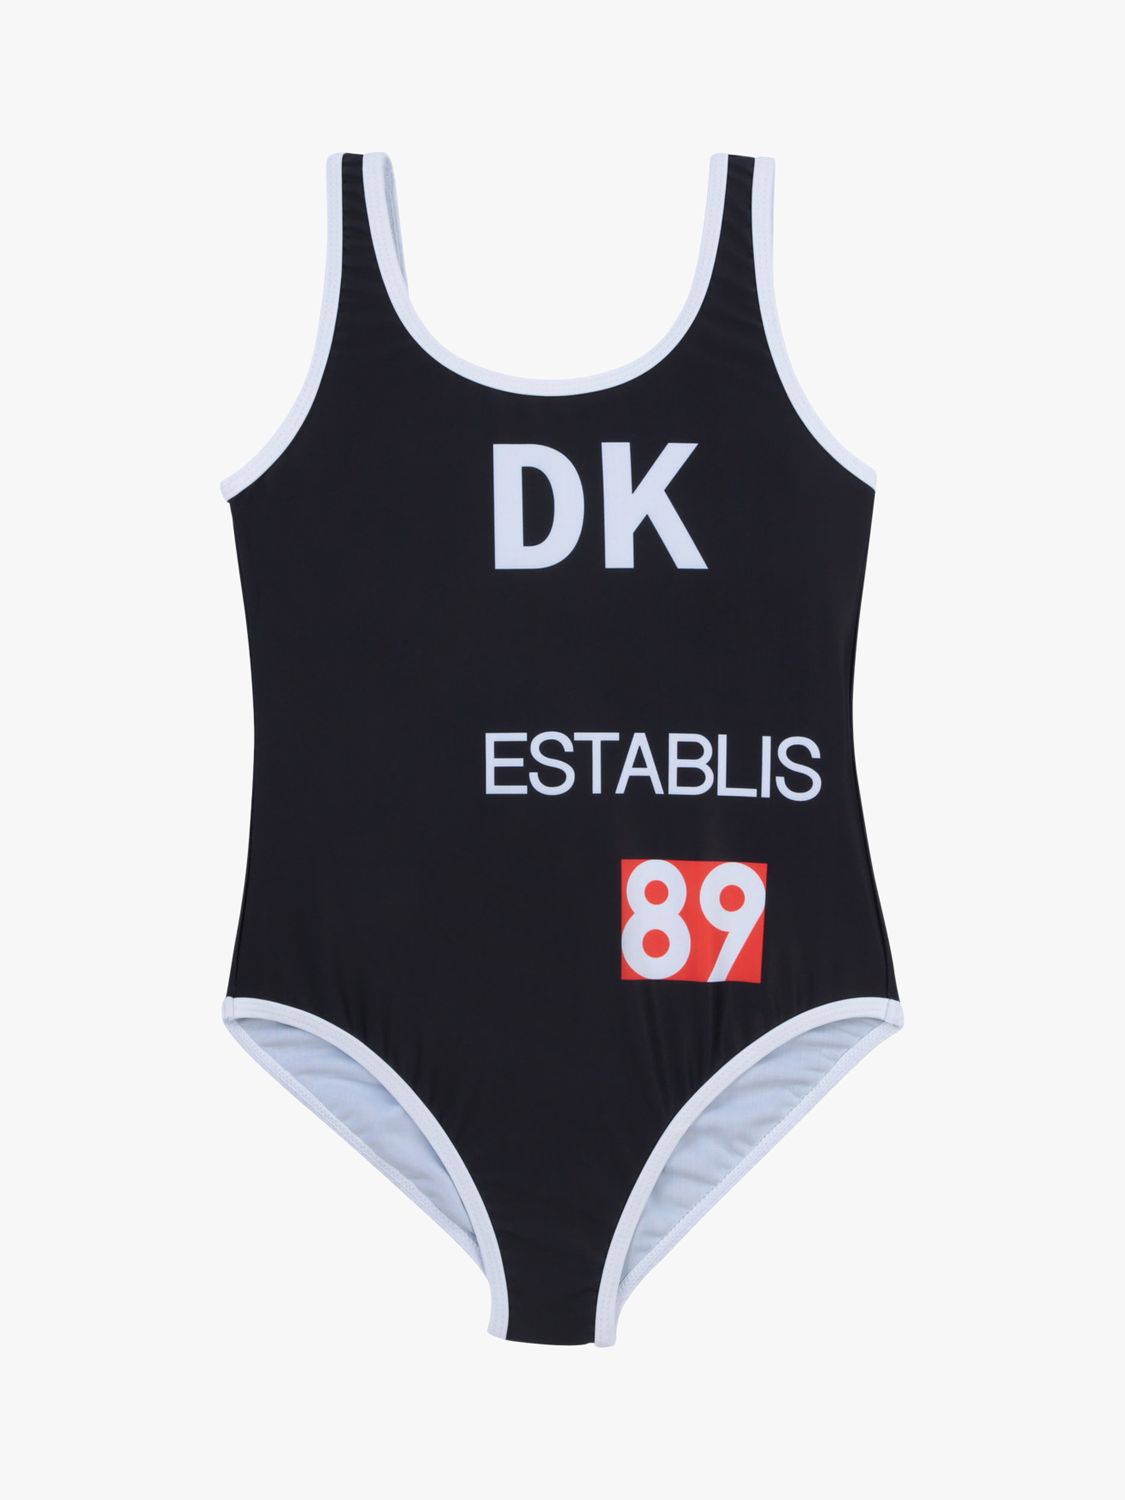 DKNY Kids' One-Piece Bathing Suit, Black